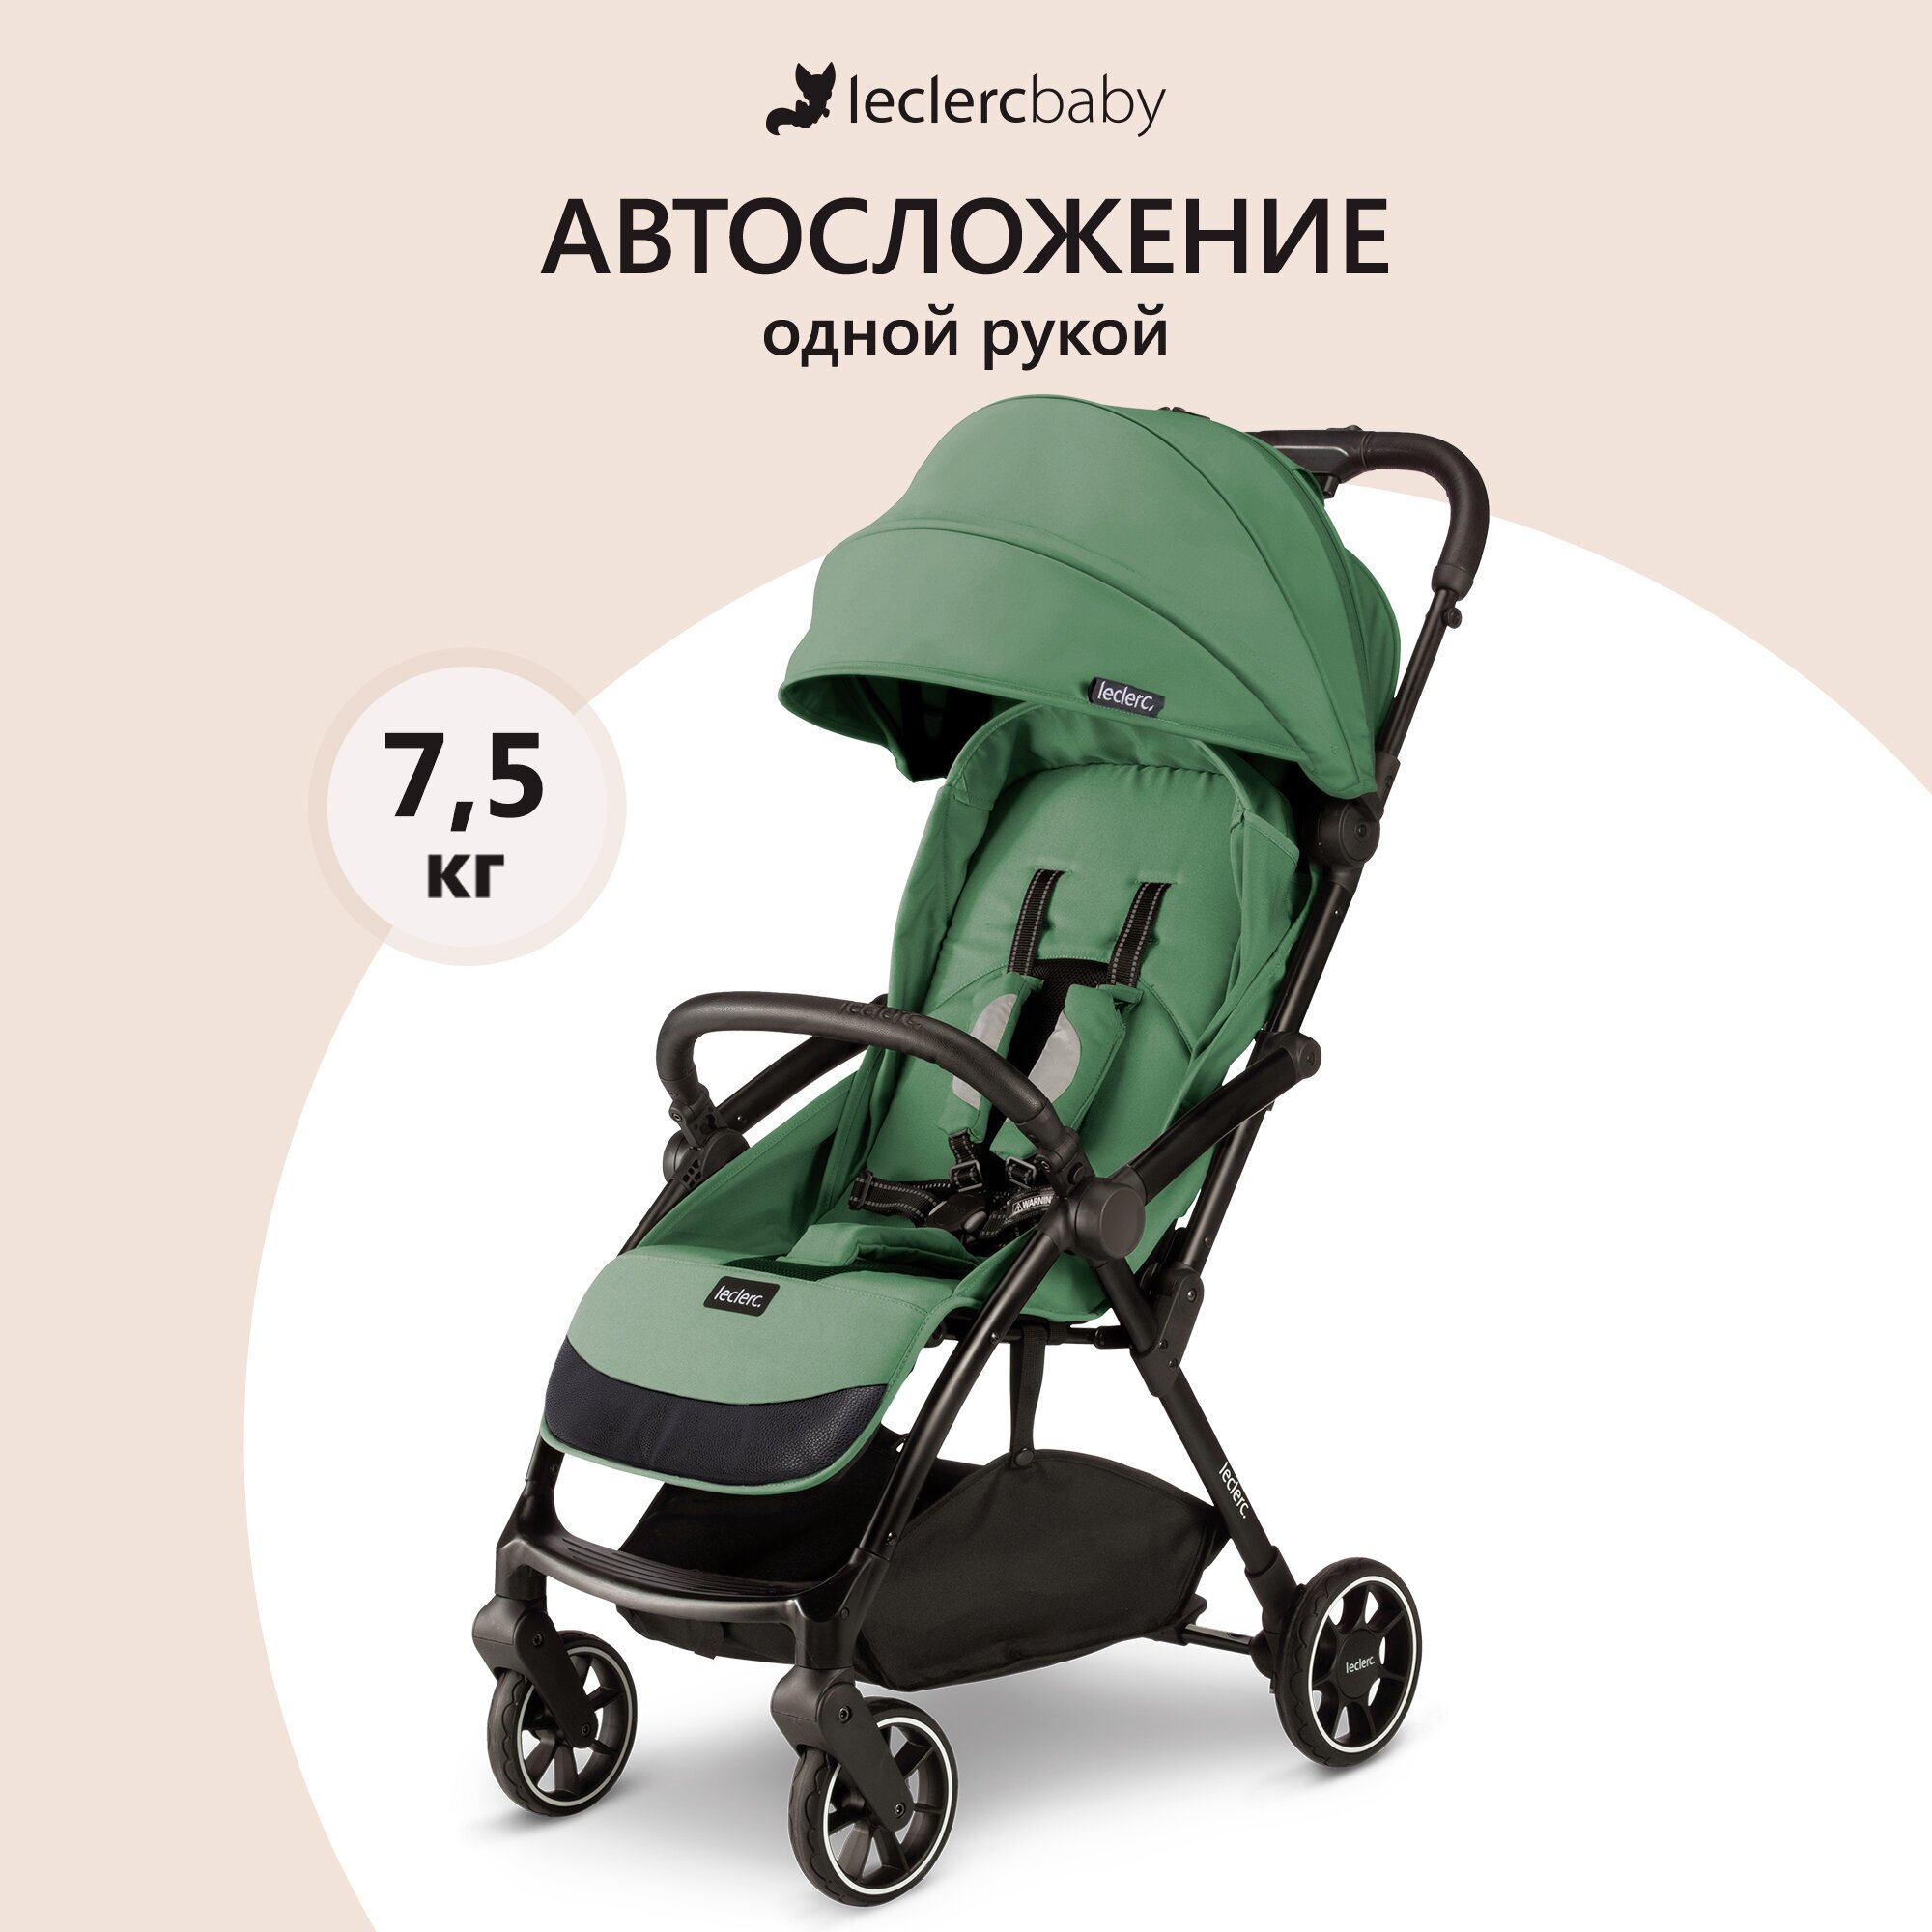 Детская прогулочная коляска Leclerc baby Magic fold plus Green